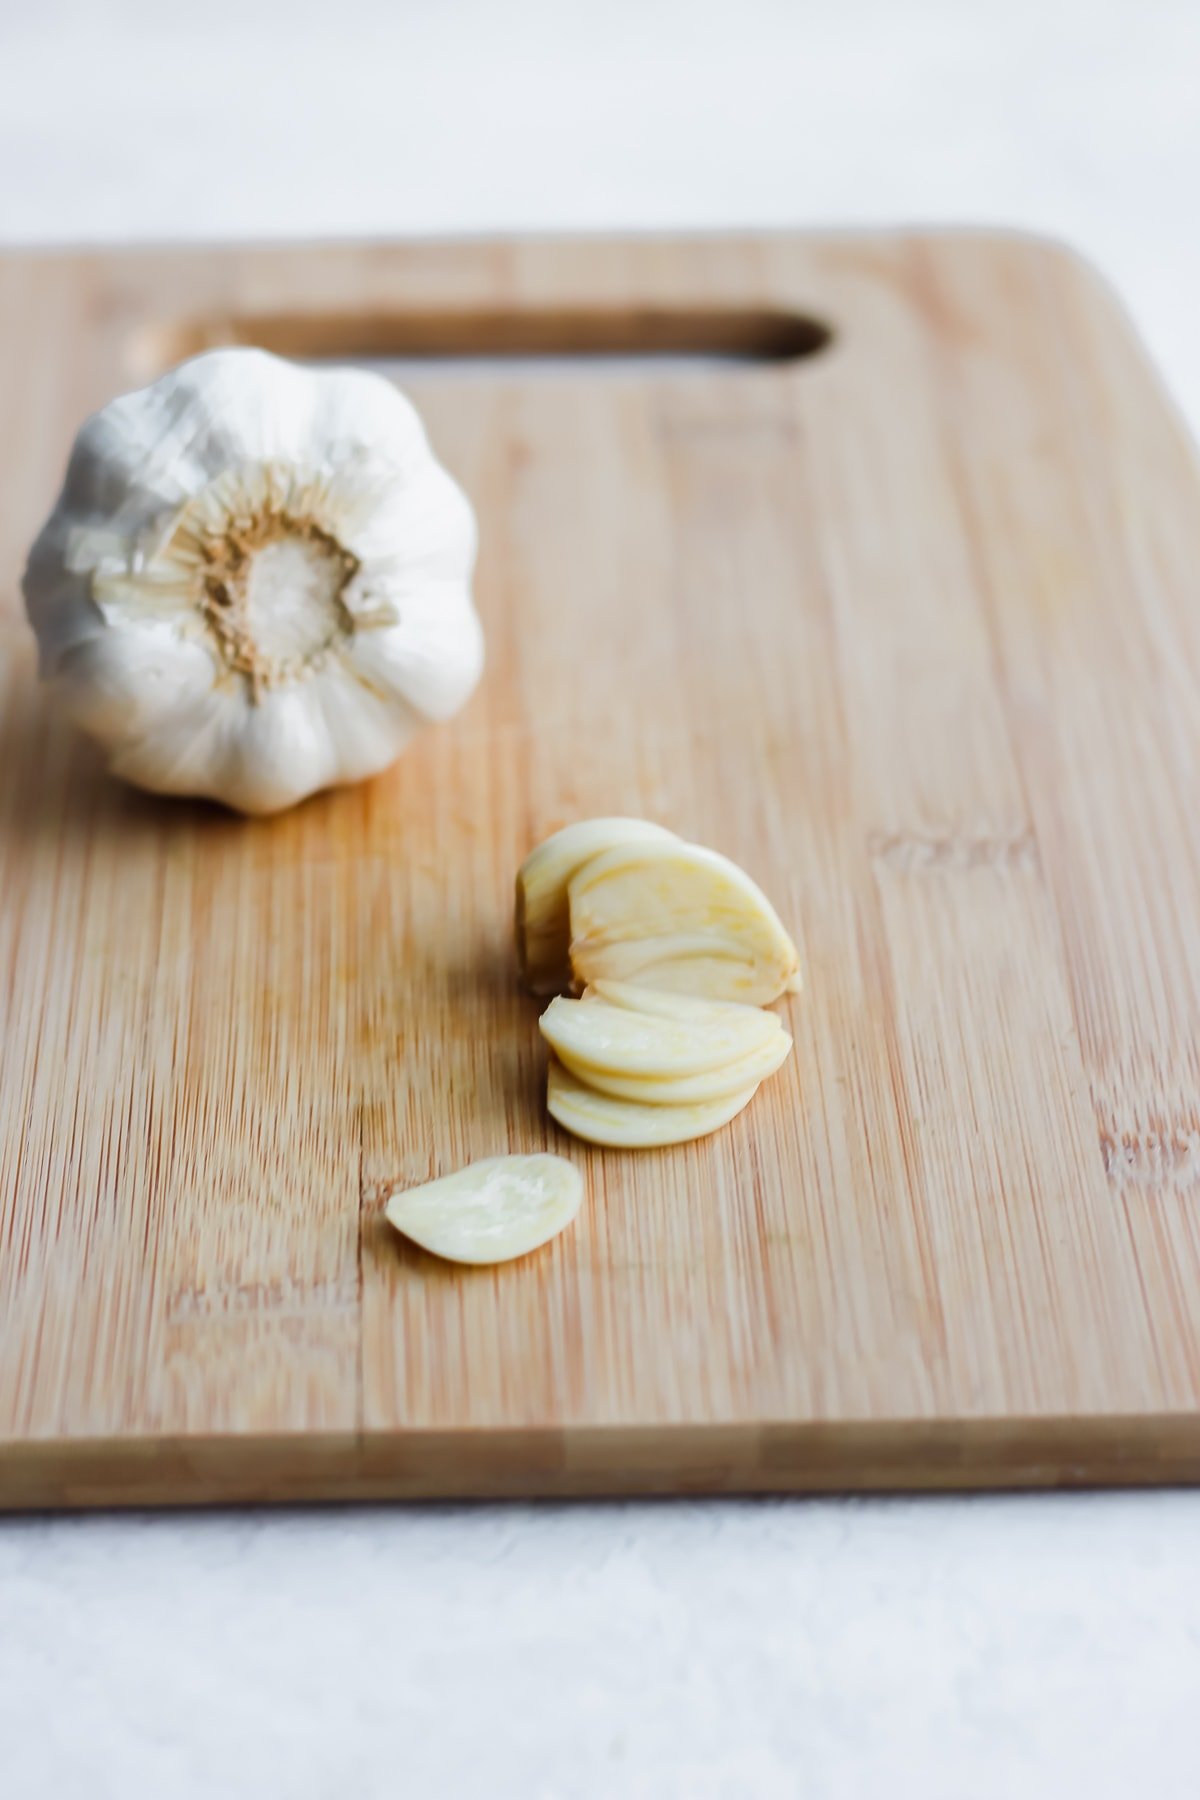 Garlic cut into slivers.